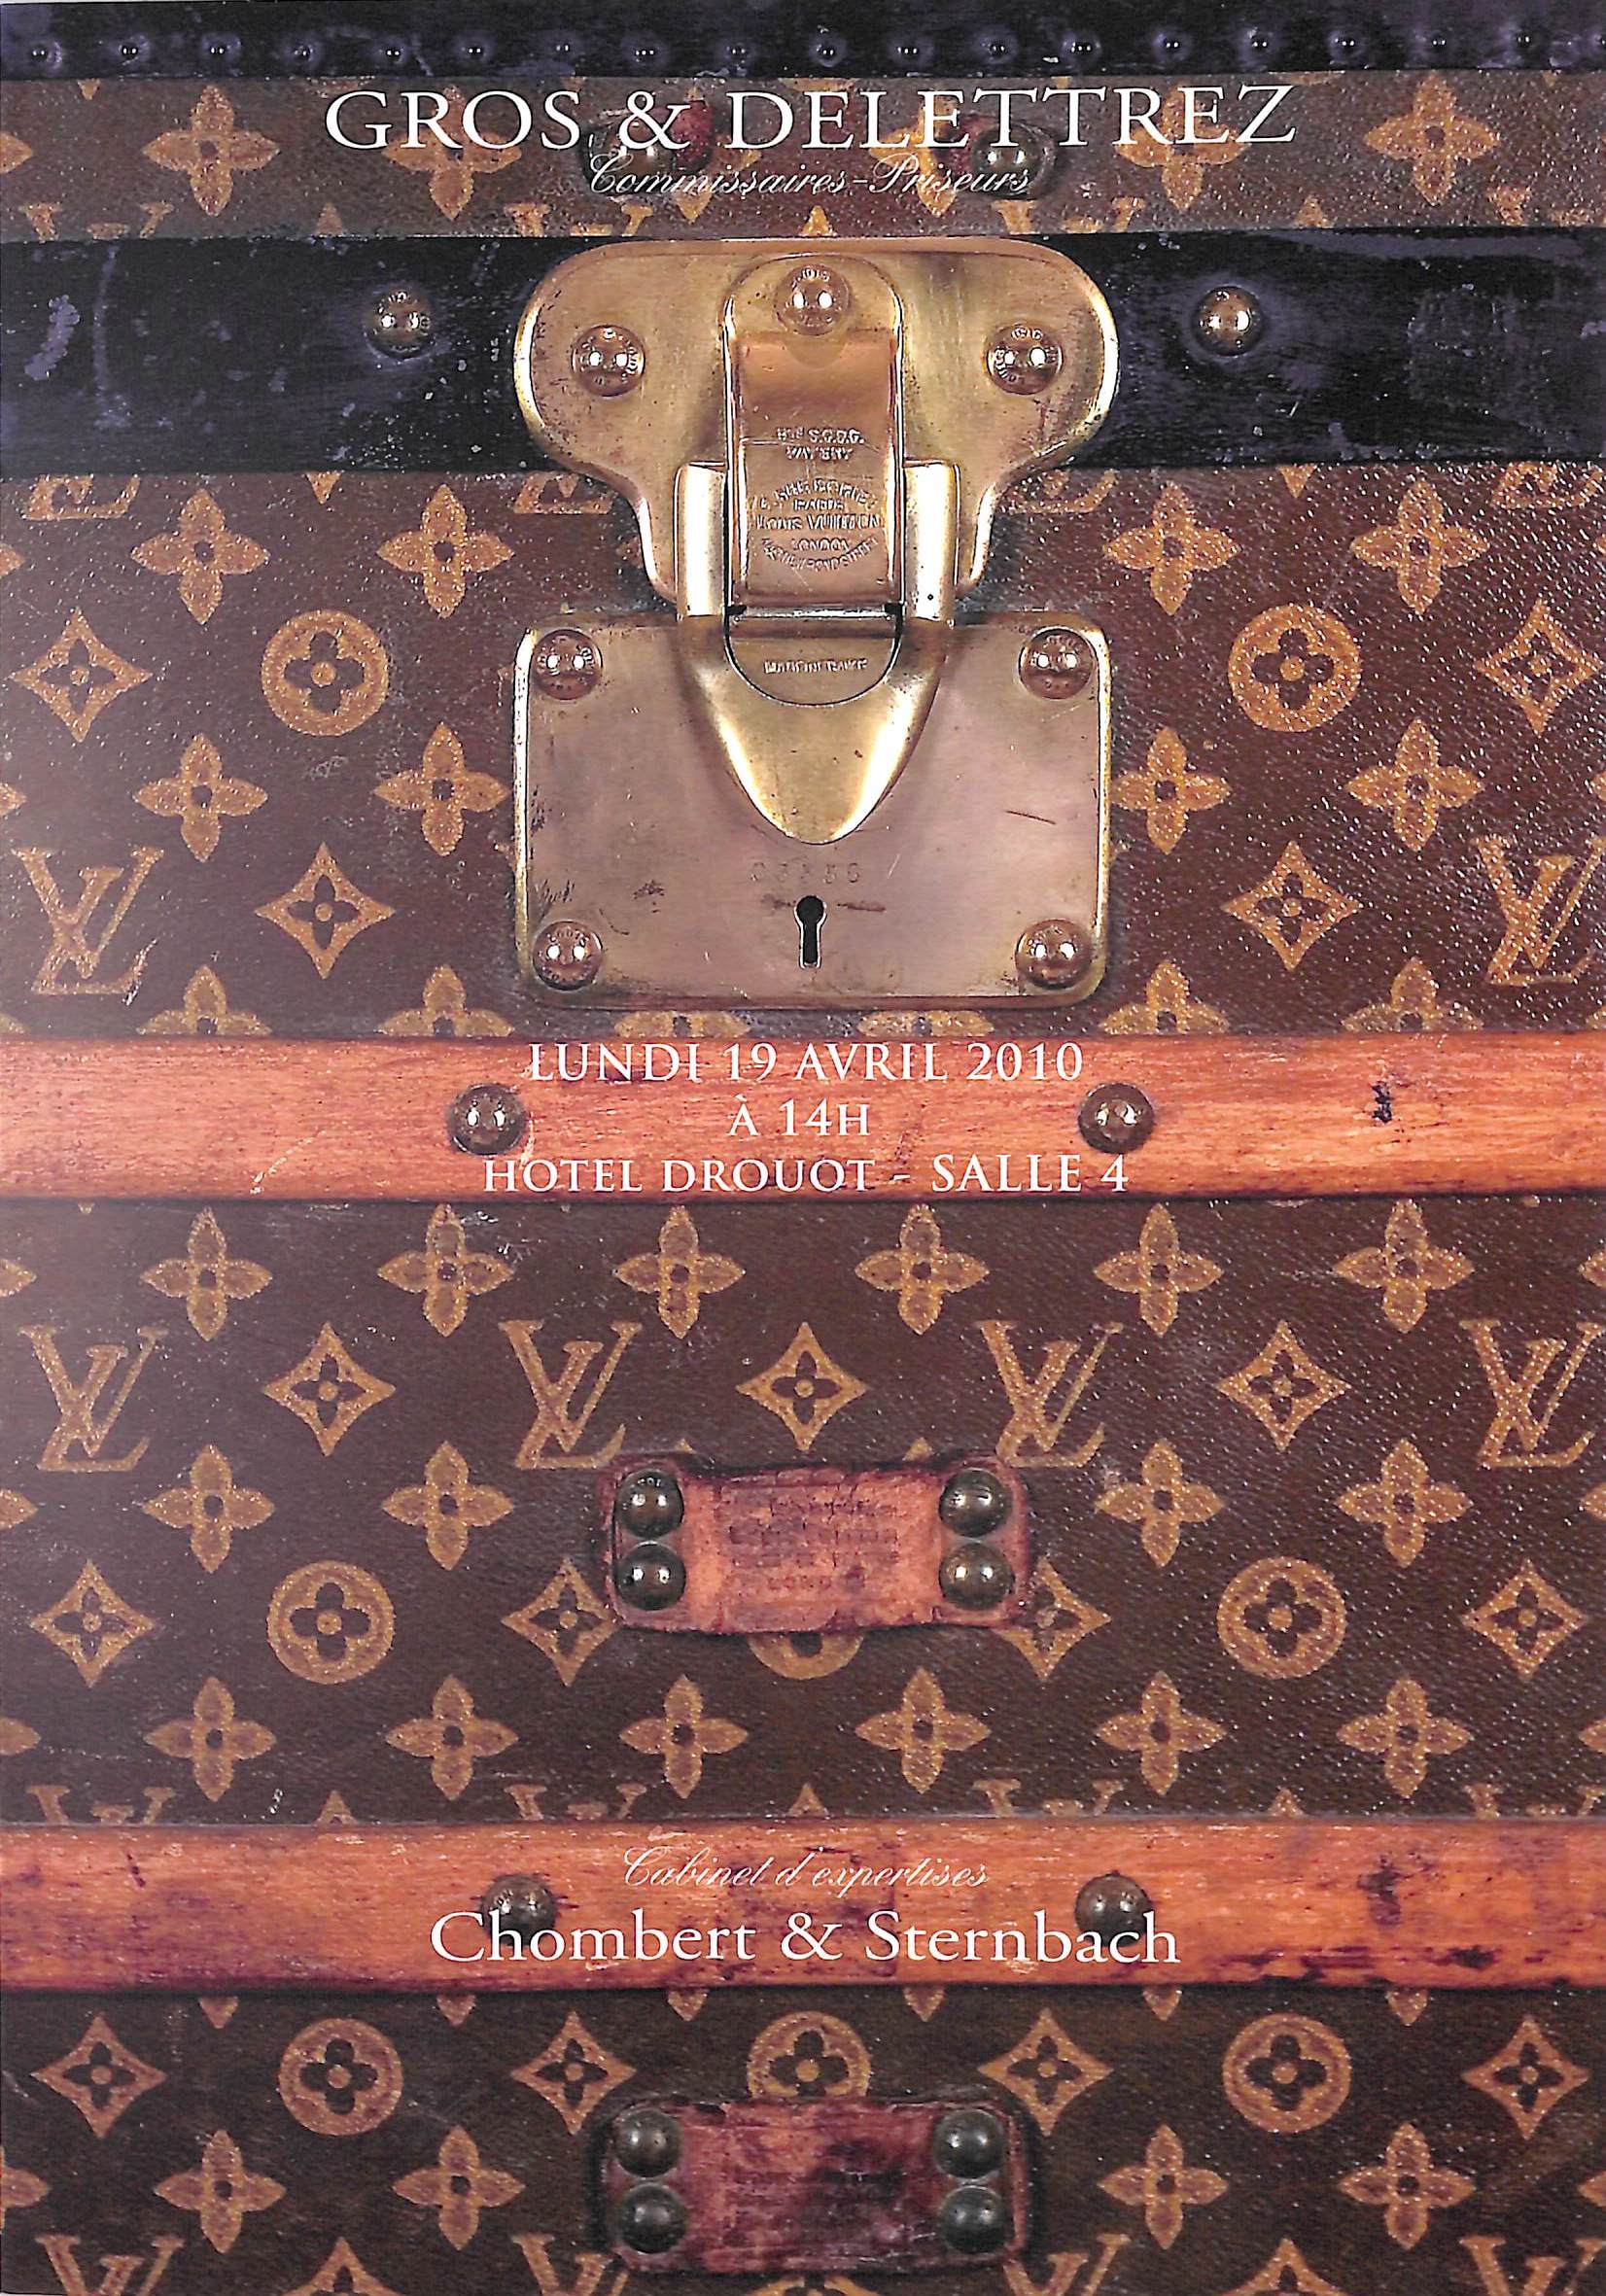 Courrier trunk Louis Vuitton - Des Voyages - Recent Added Items